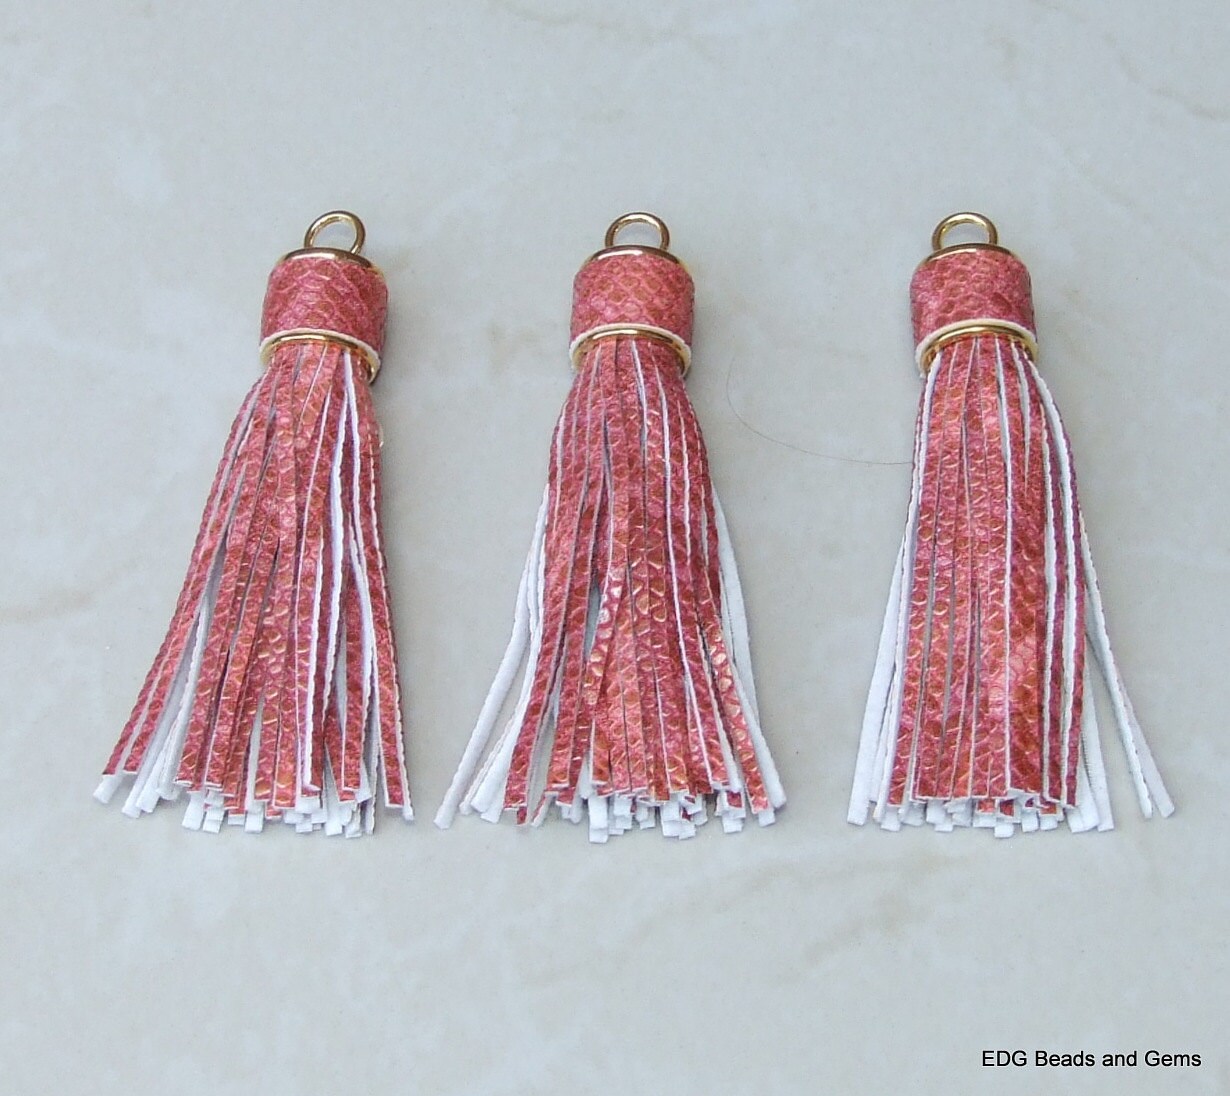 Tassel, Red and Gold Leather Tassel, Tassel Pendant - 3 inch Tassel